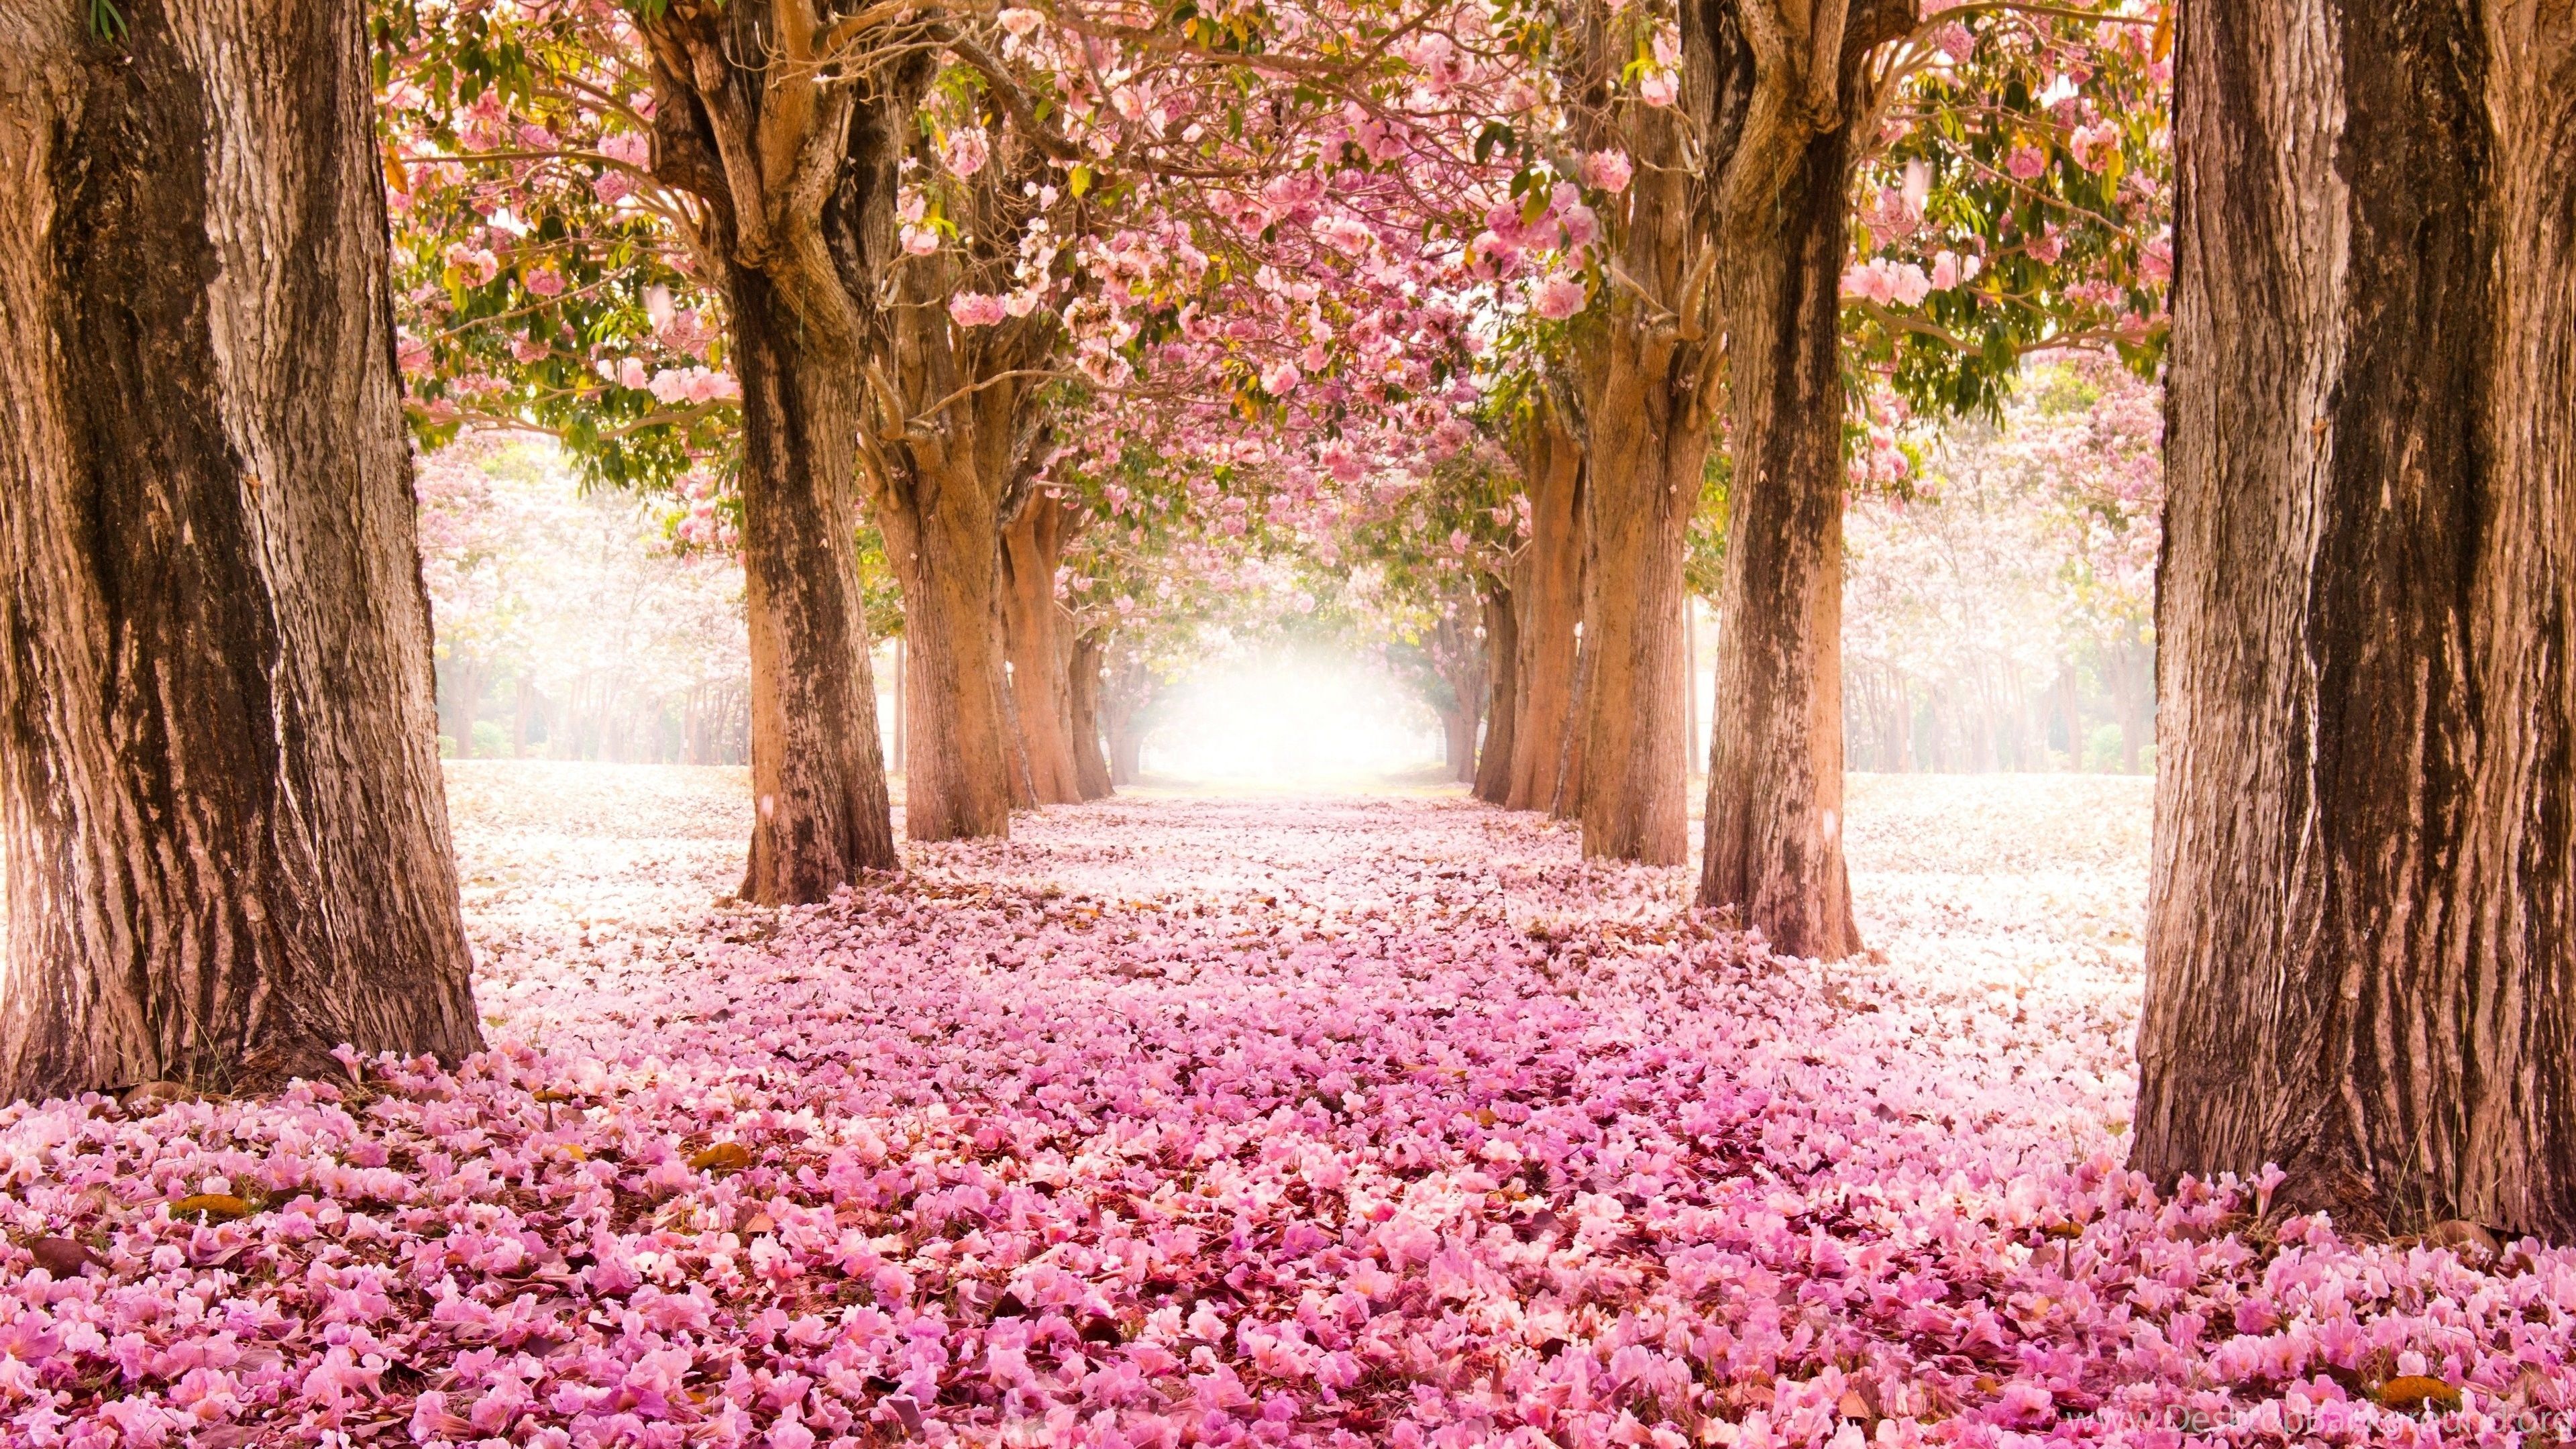 Spring In Japan Cherry Blossom 4k Ultra HD Wallpaper For Deskx2160, Wallpaper13.com